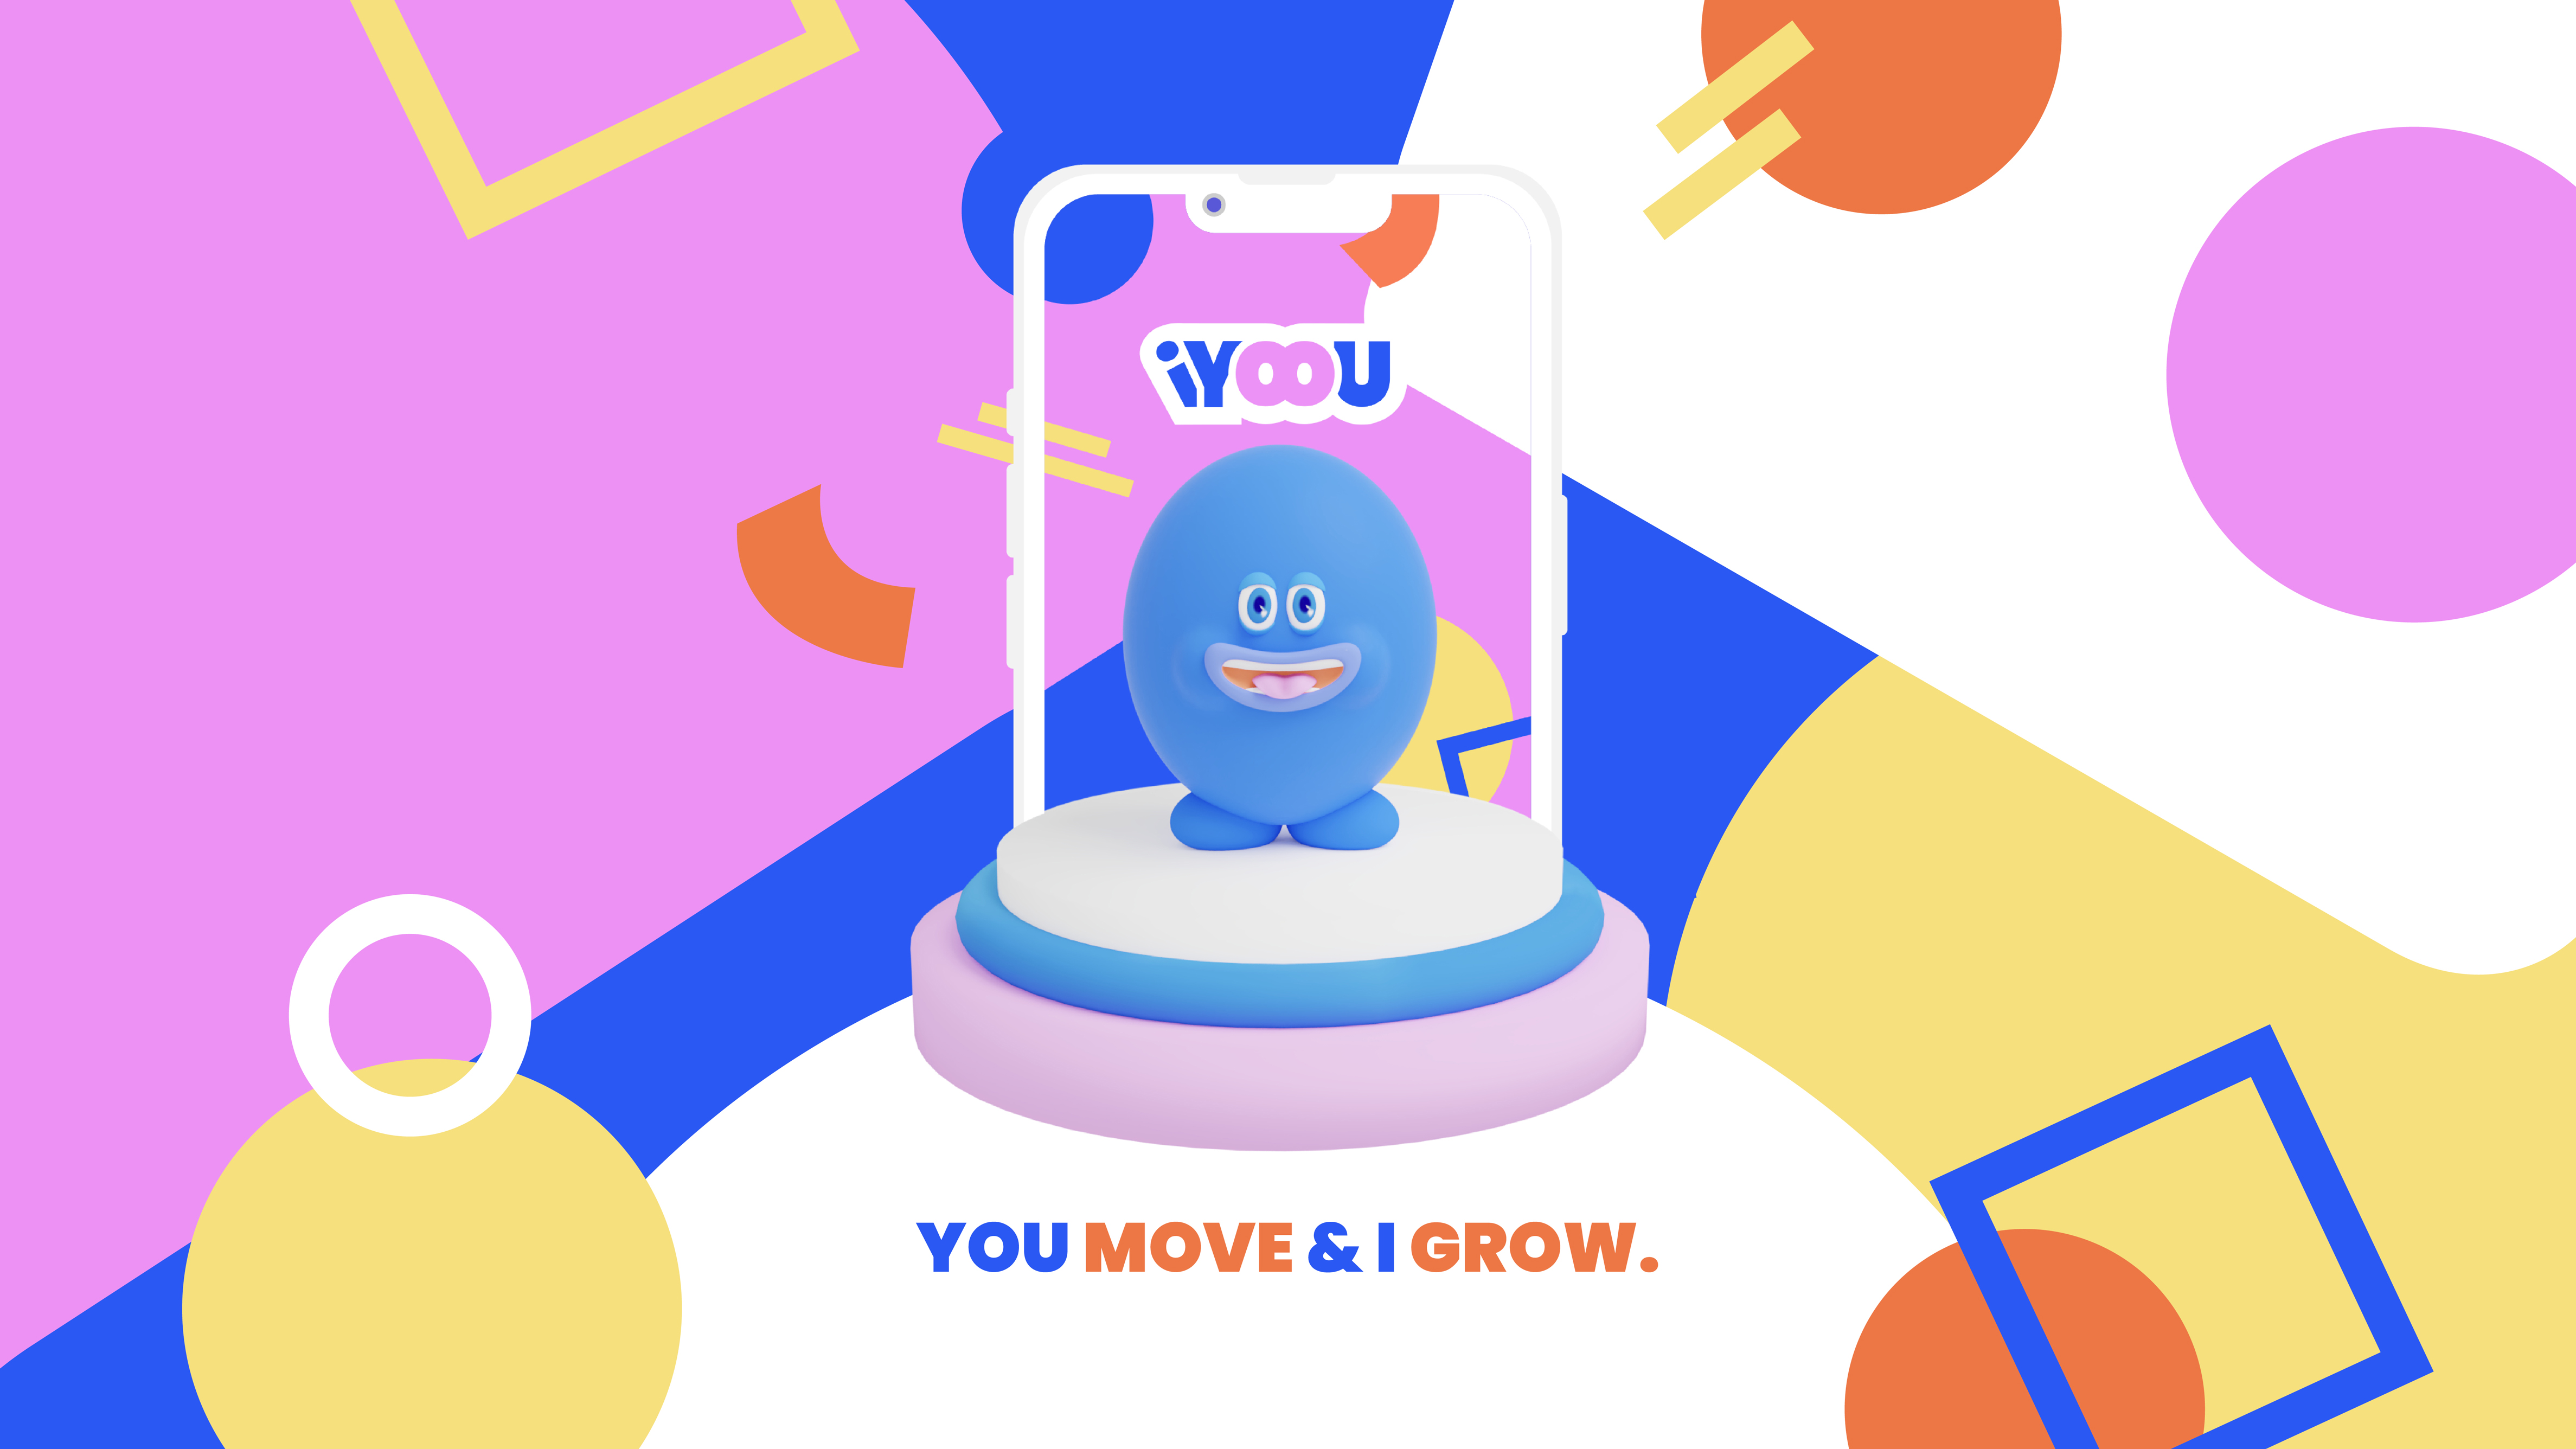 iYoou – You move and I grow.